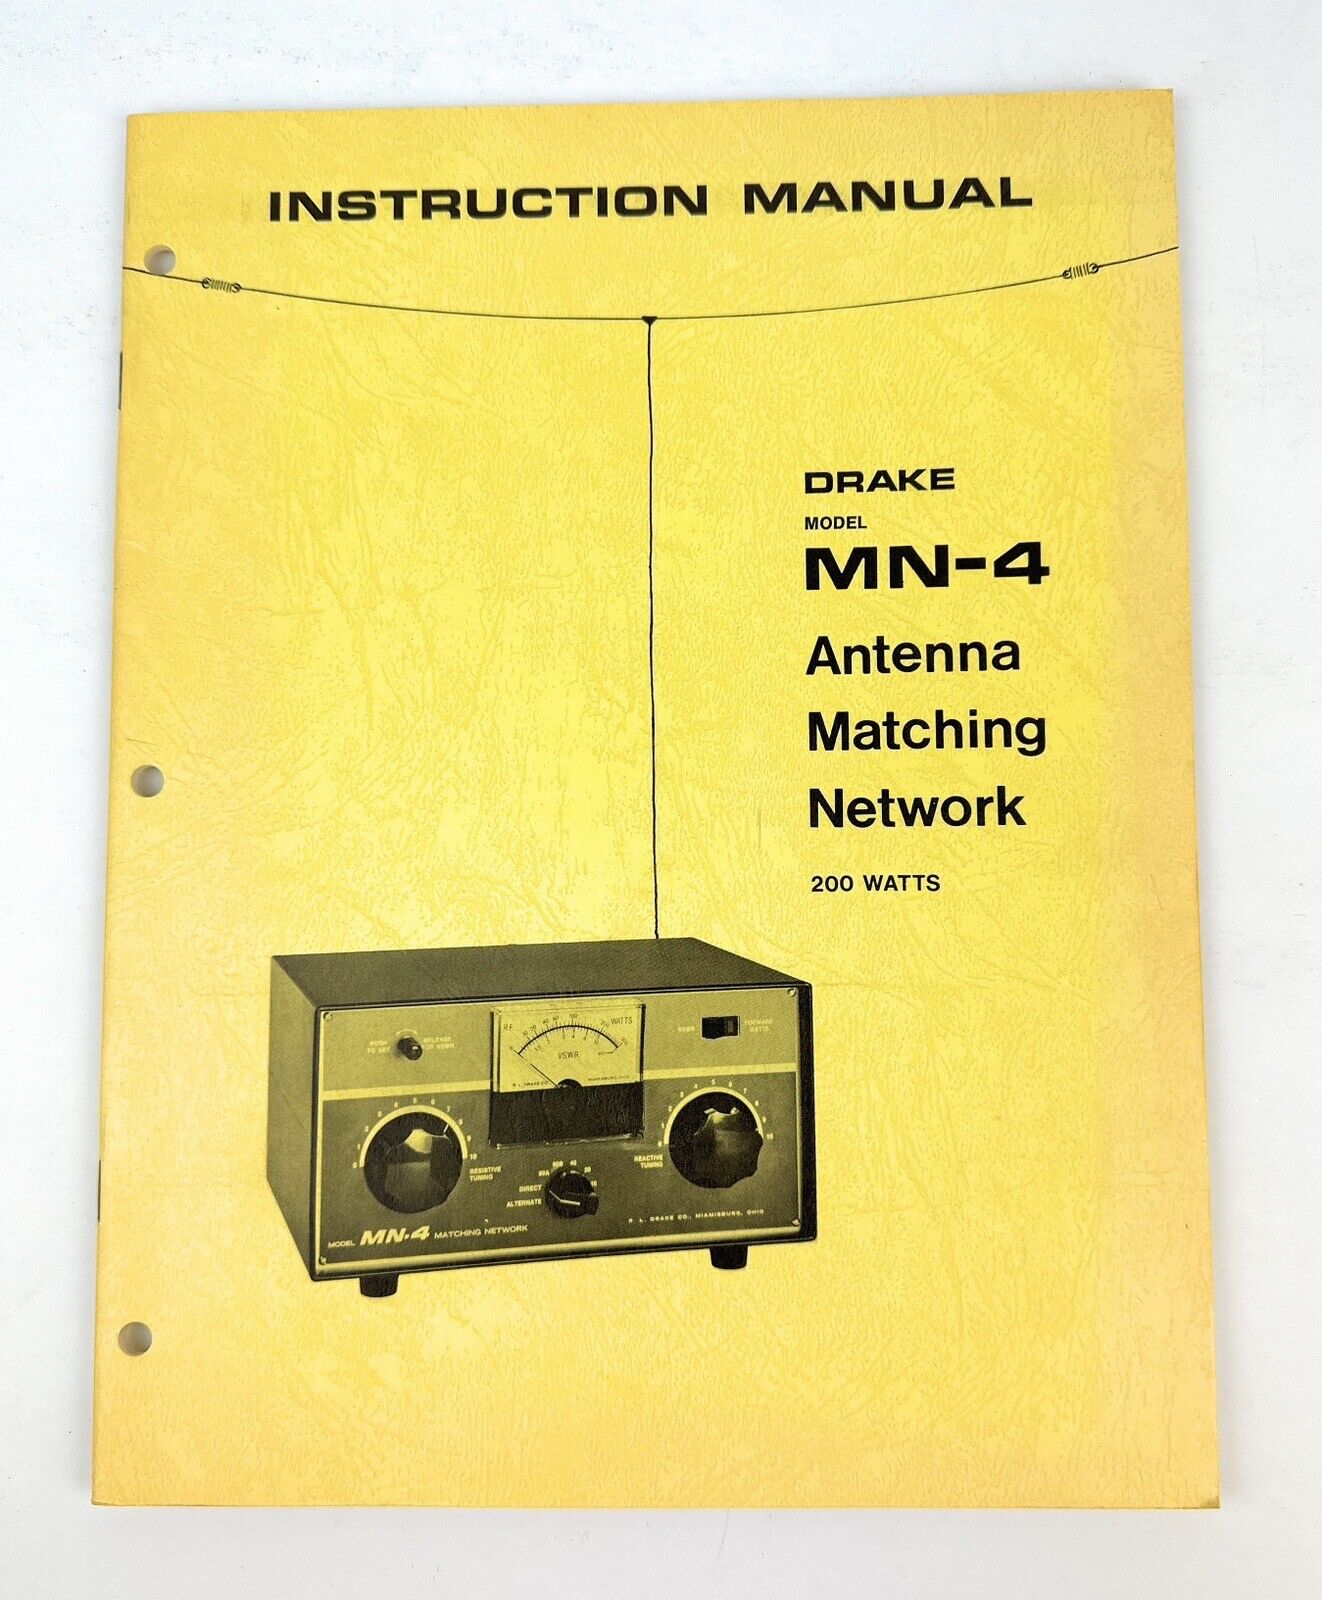 INSTRUCTION MANUAL DRAKE MODEL MN-4 ANTENNA MATCHING NETWORK MANUAL